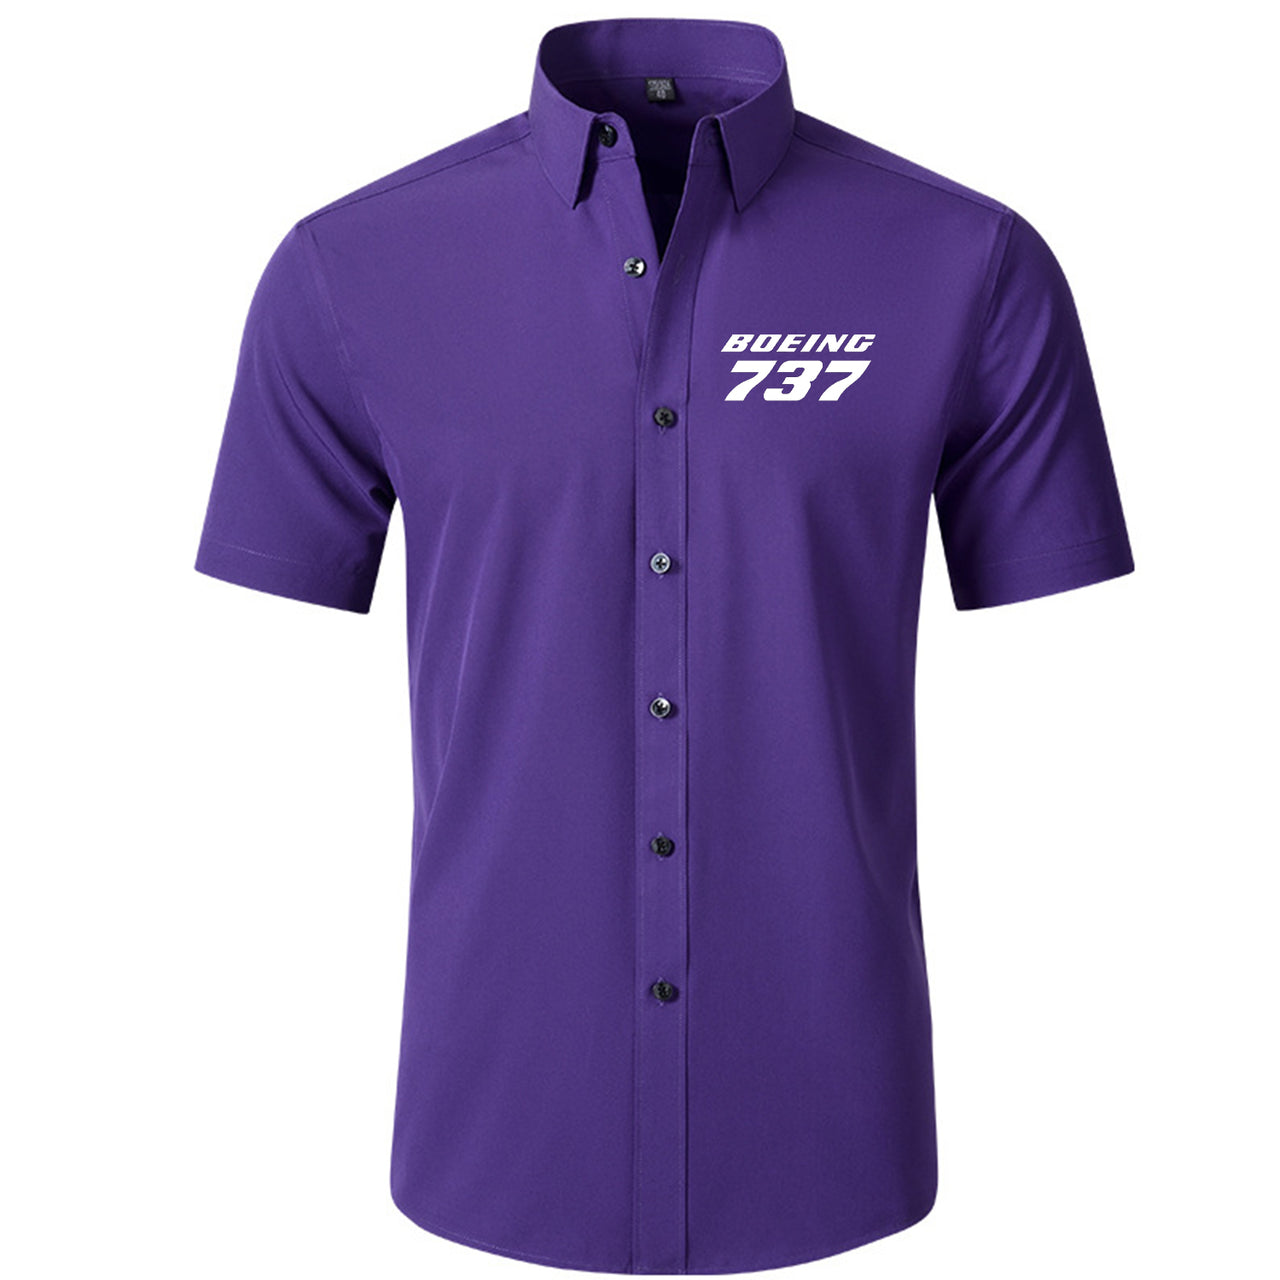 Boeing 737 & Text Designed Short Sleeve Shirts